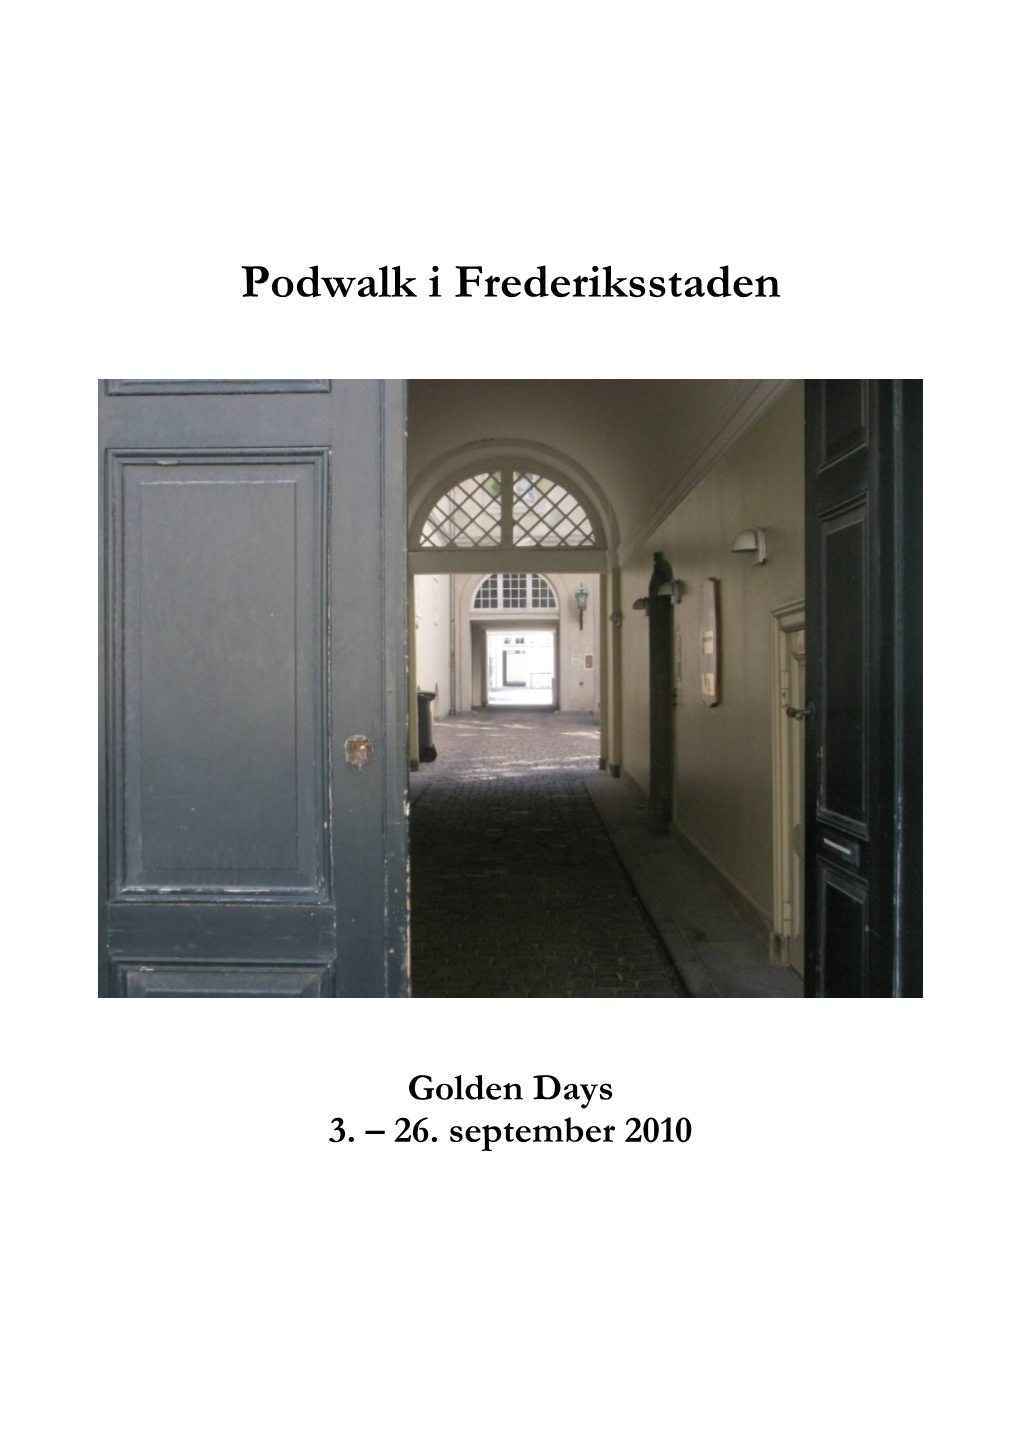 Podwalk I Frederiksstaden